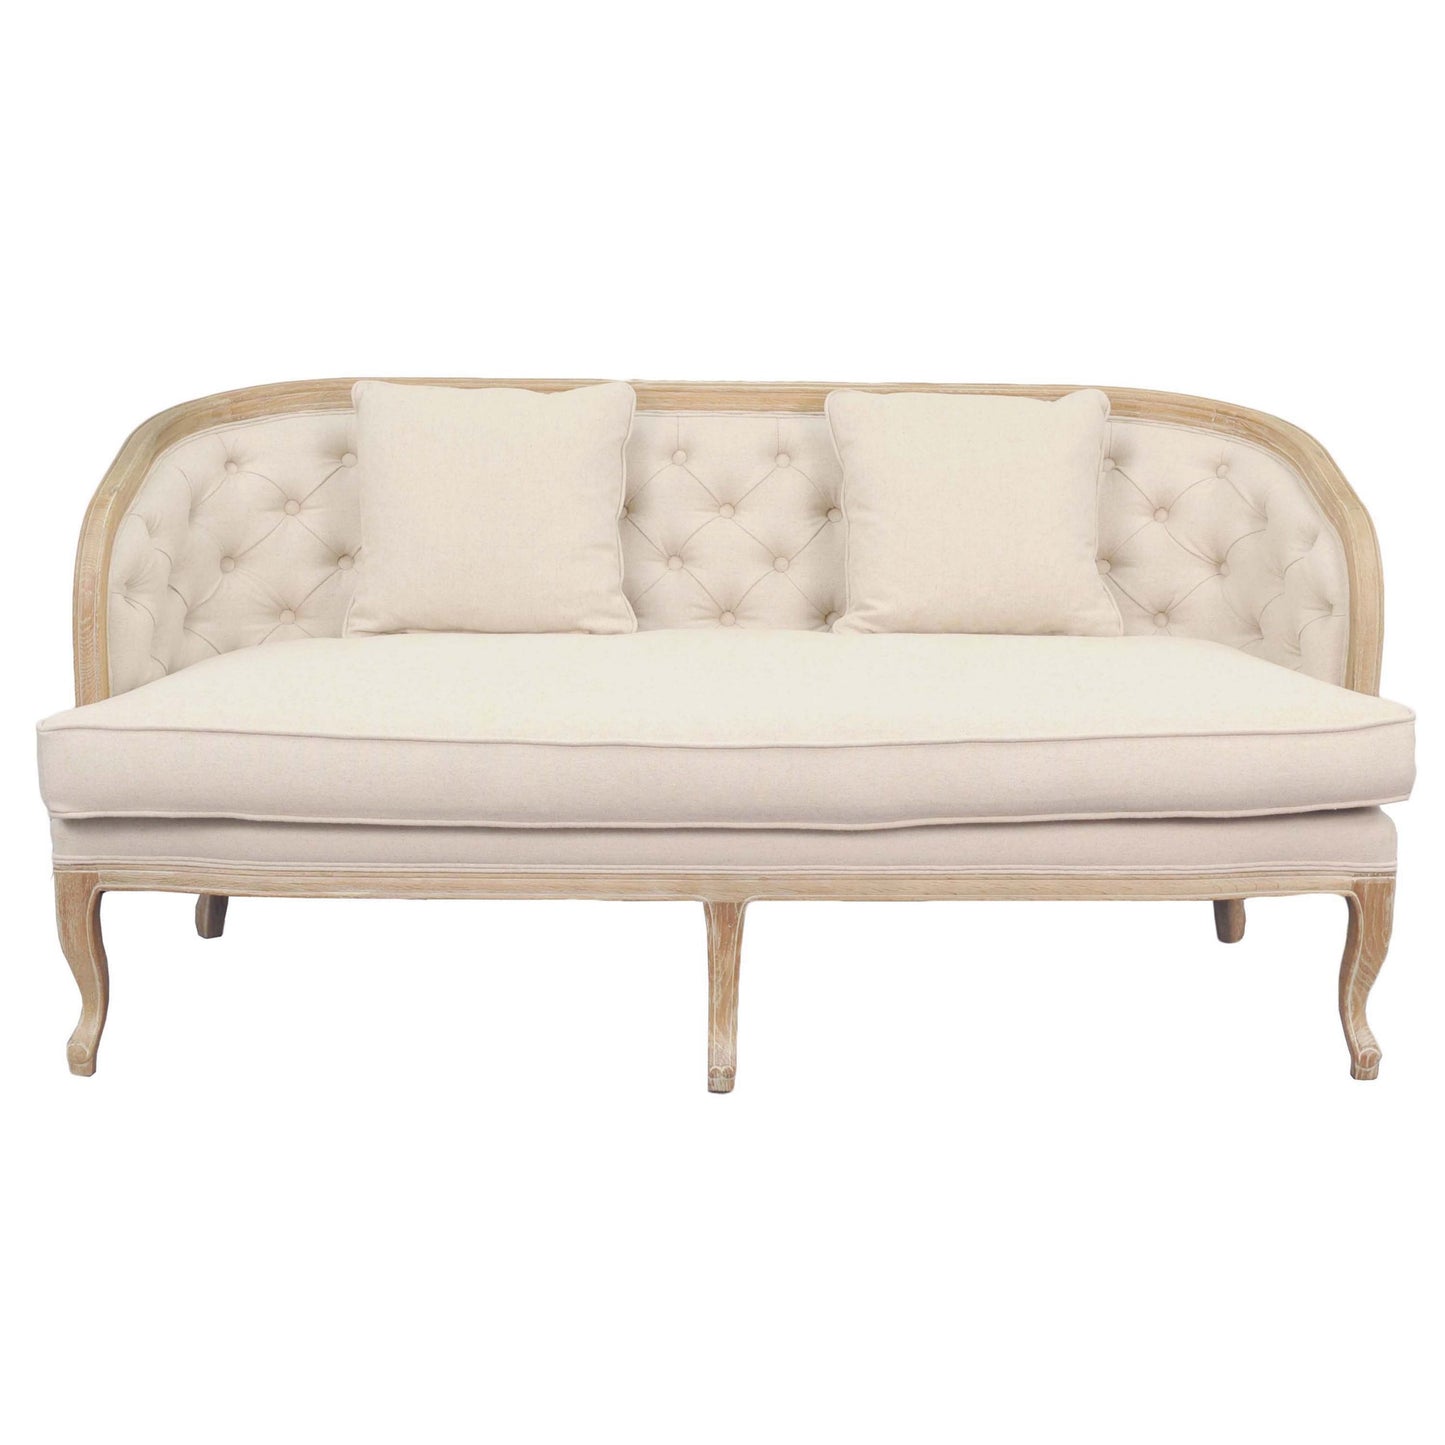 French Rustic Sofa